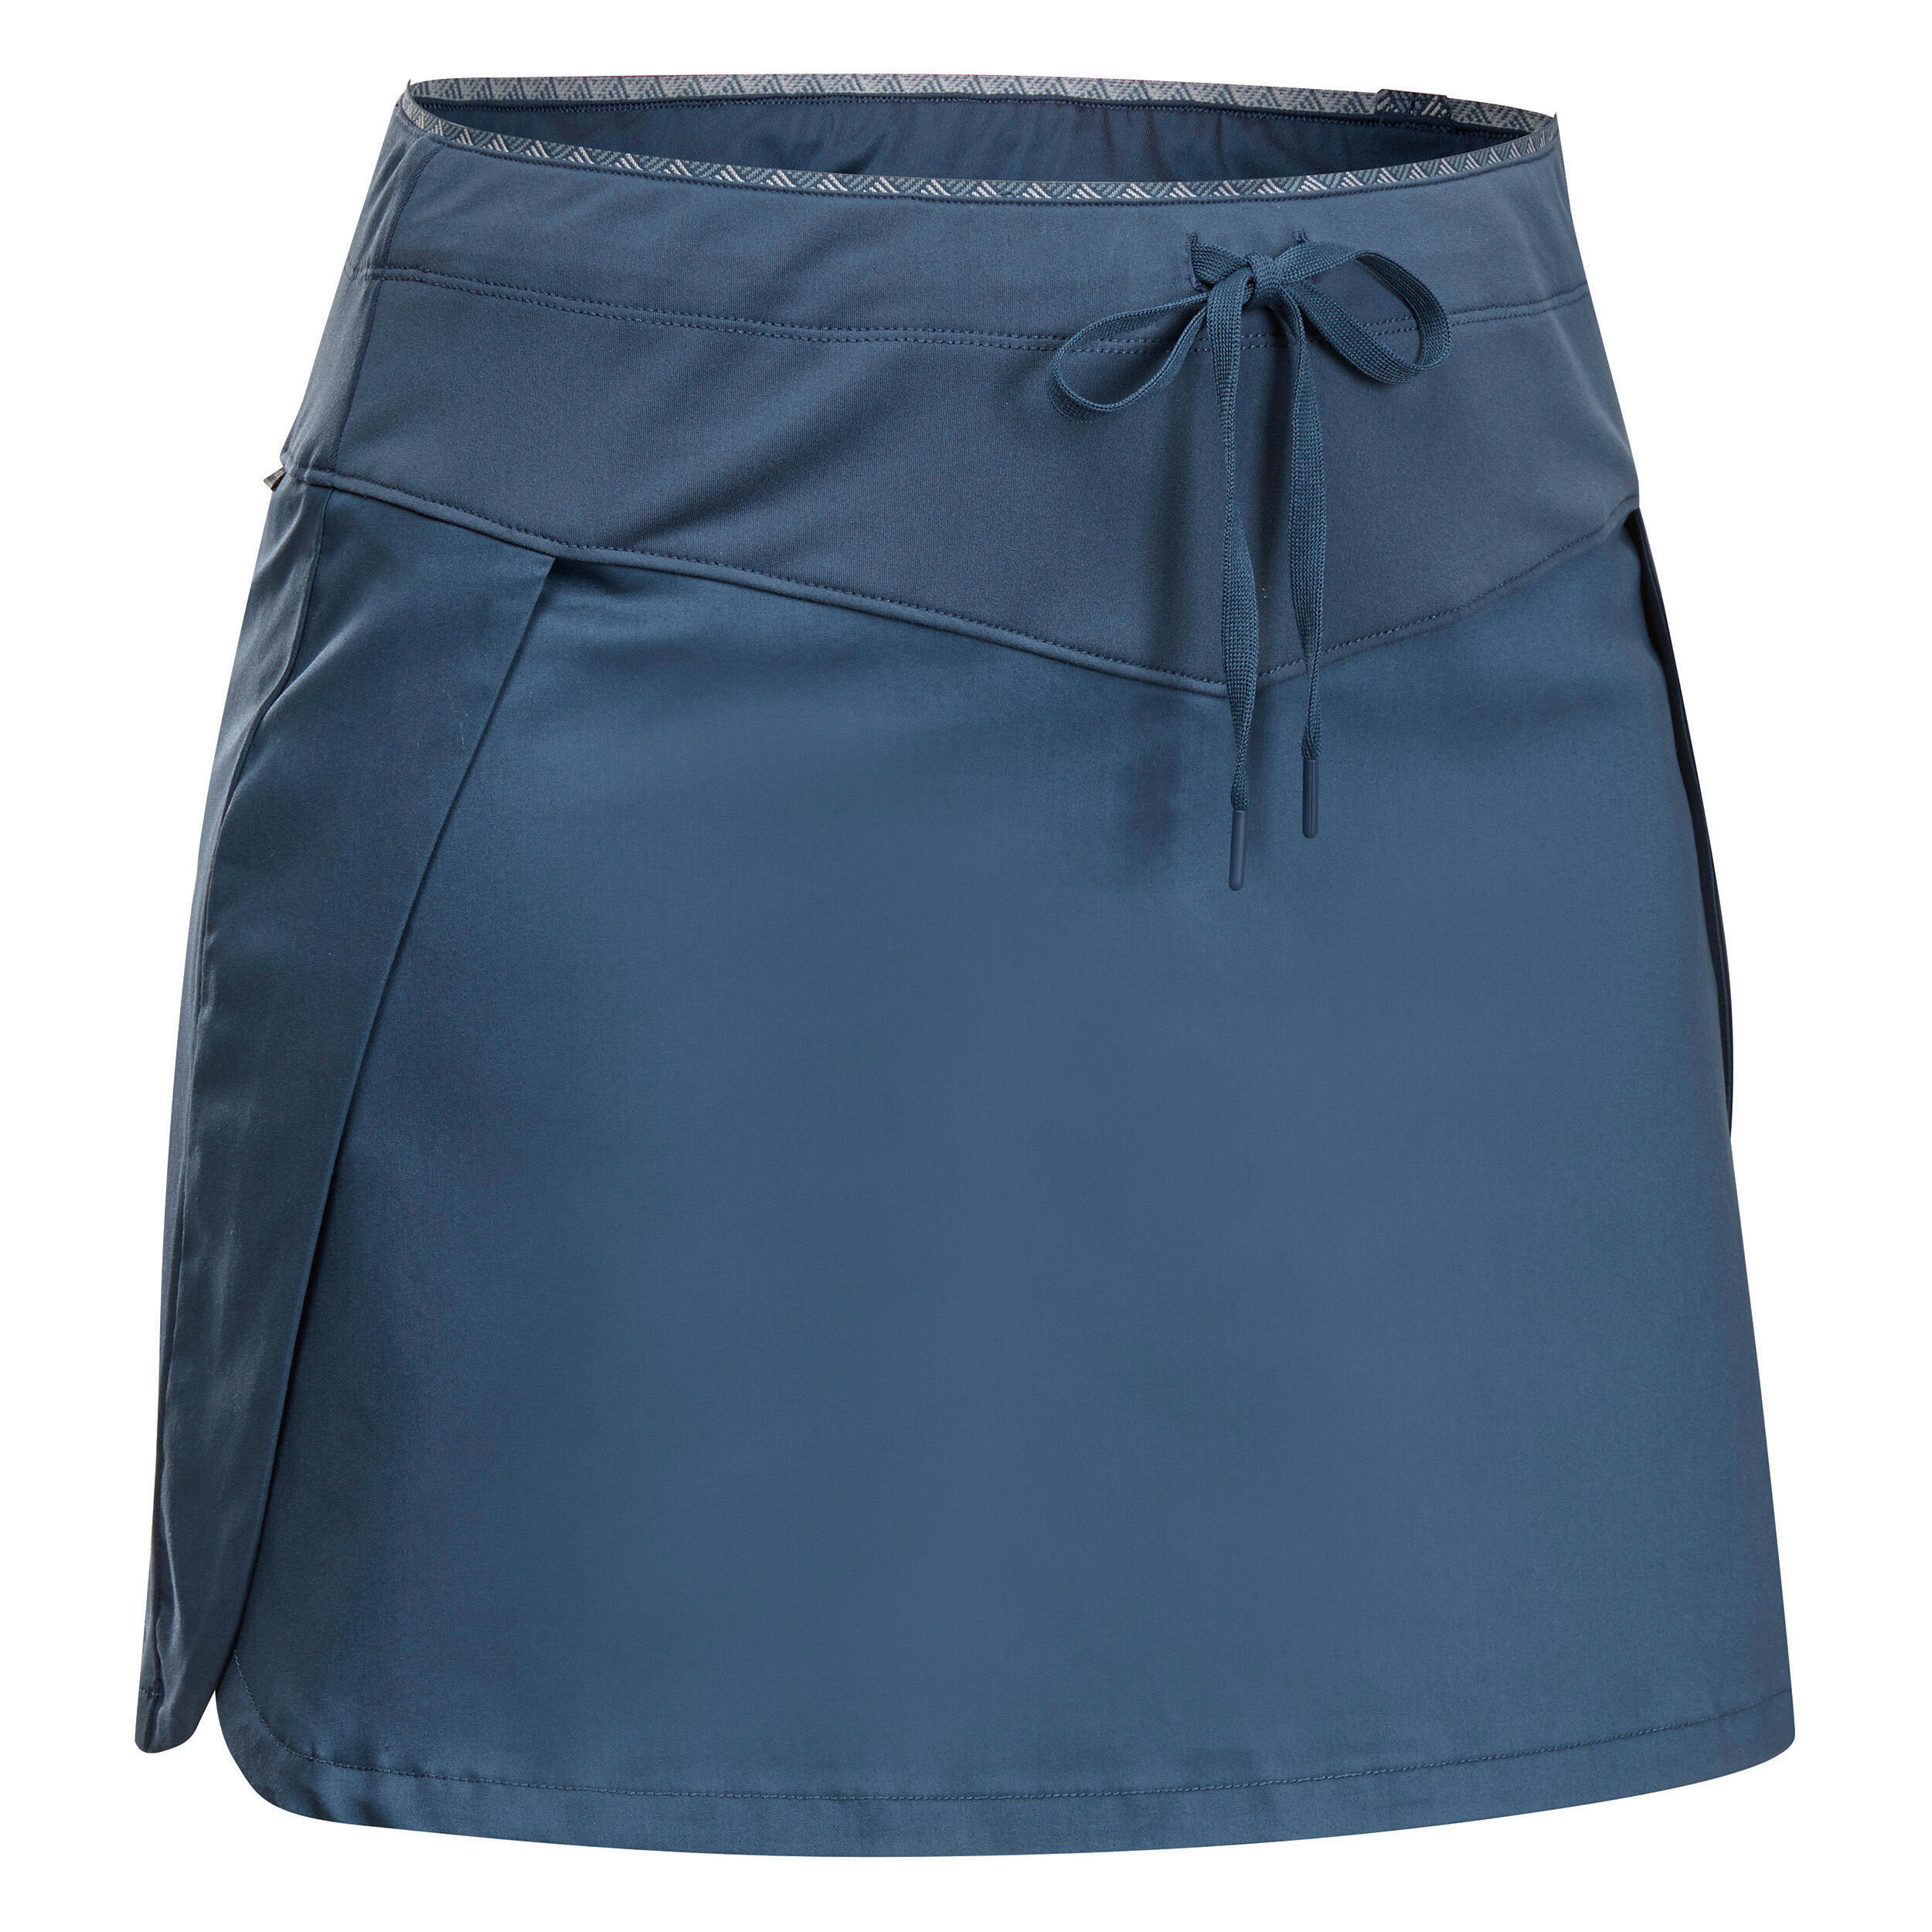 Women's Hiking Skirt - NH 500 Blue - Whale grey, Whale grey